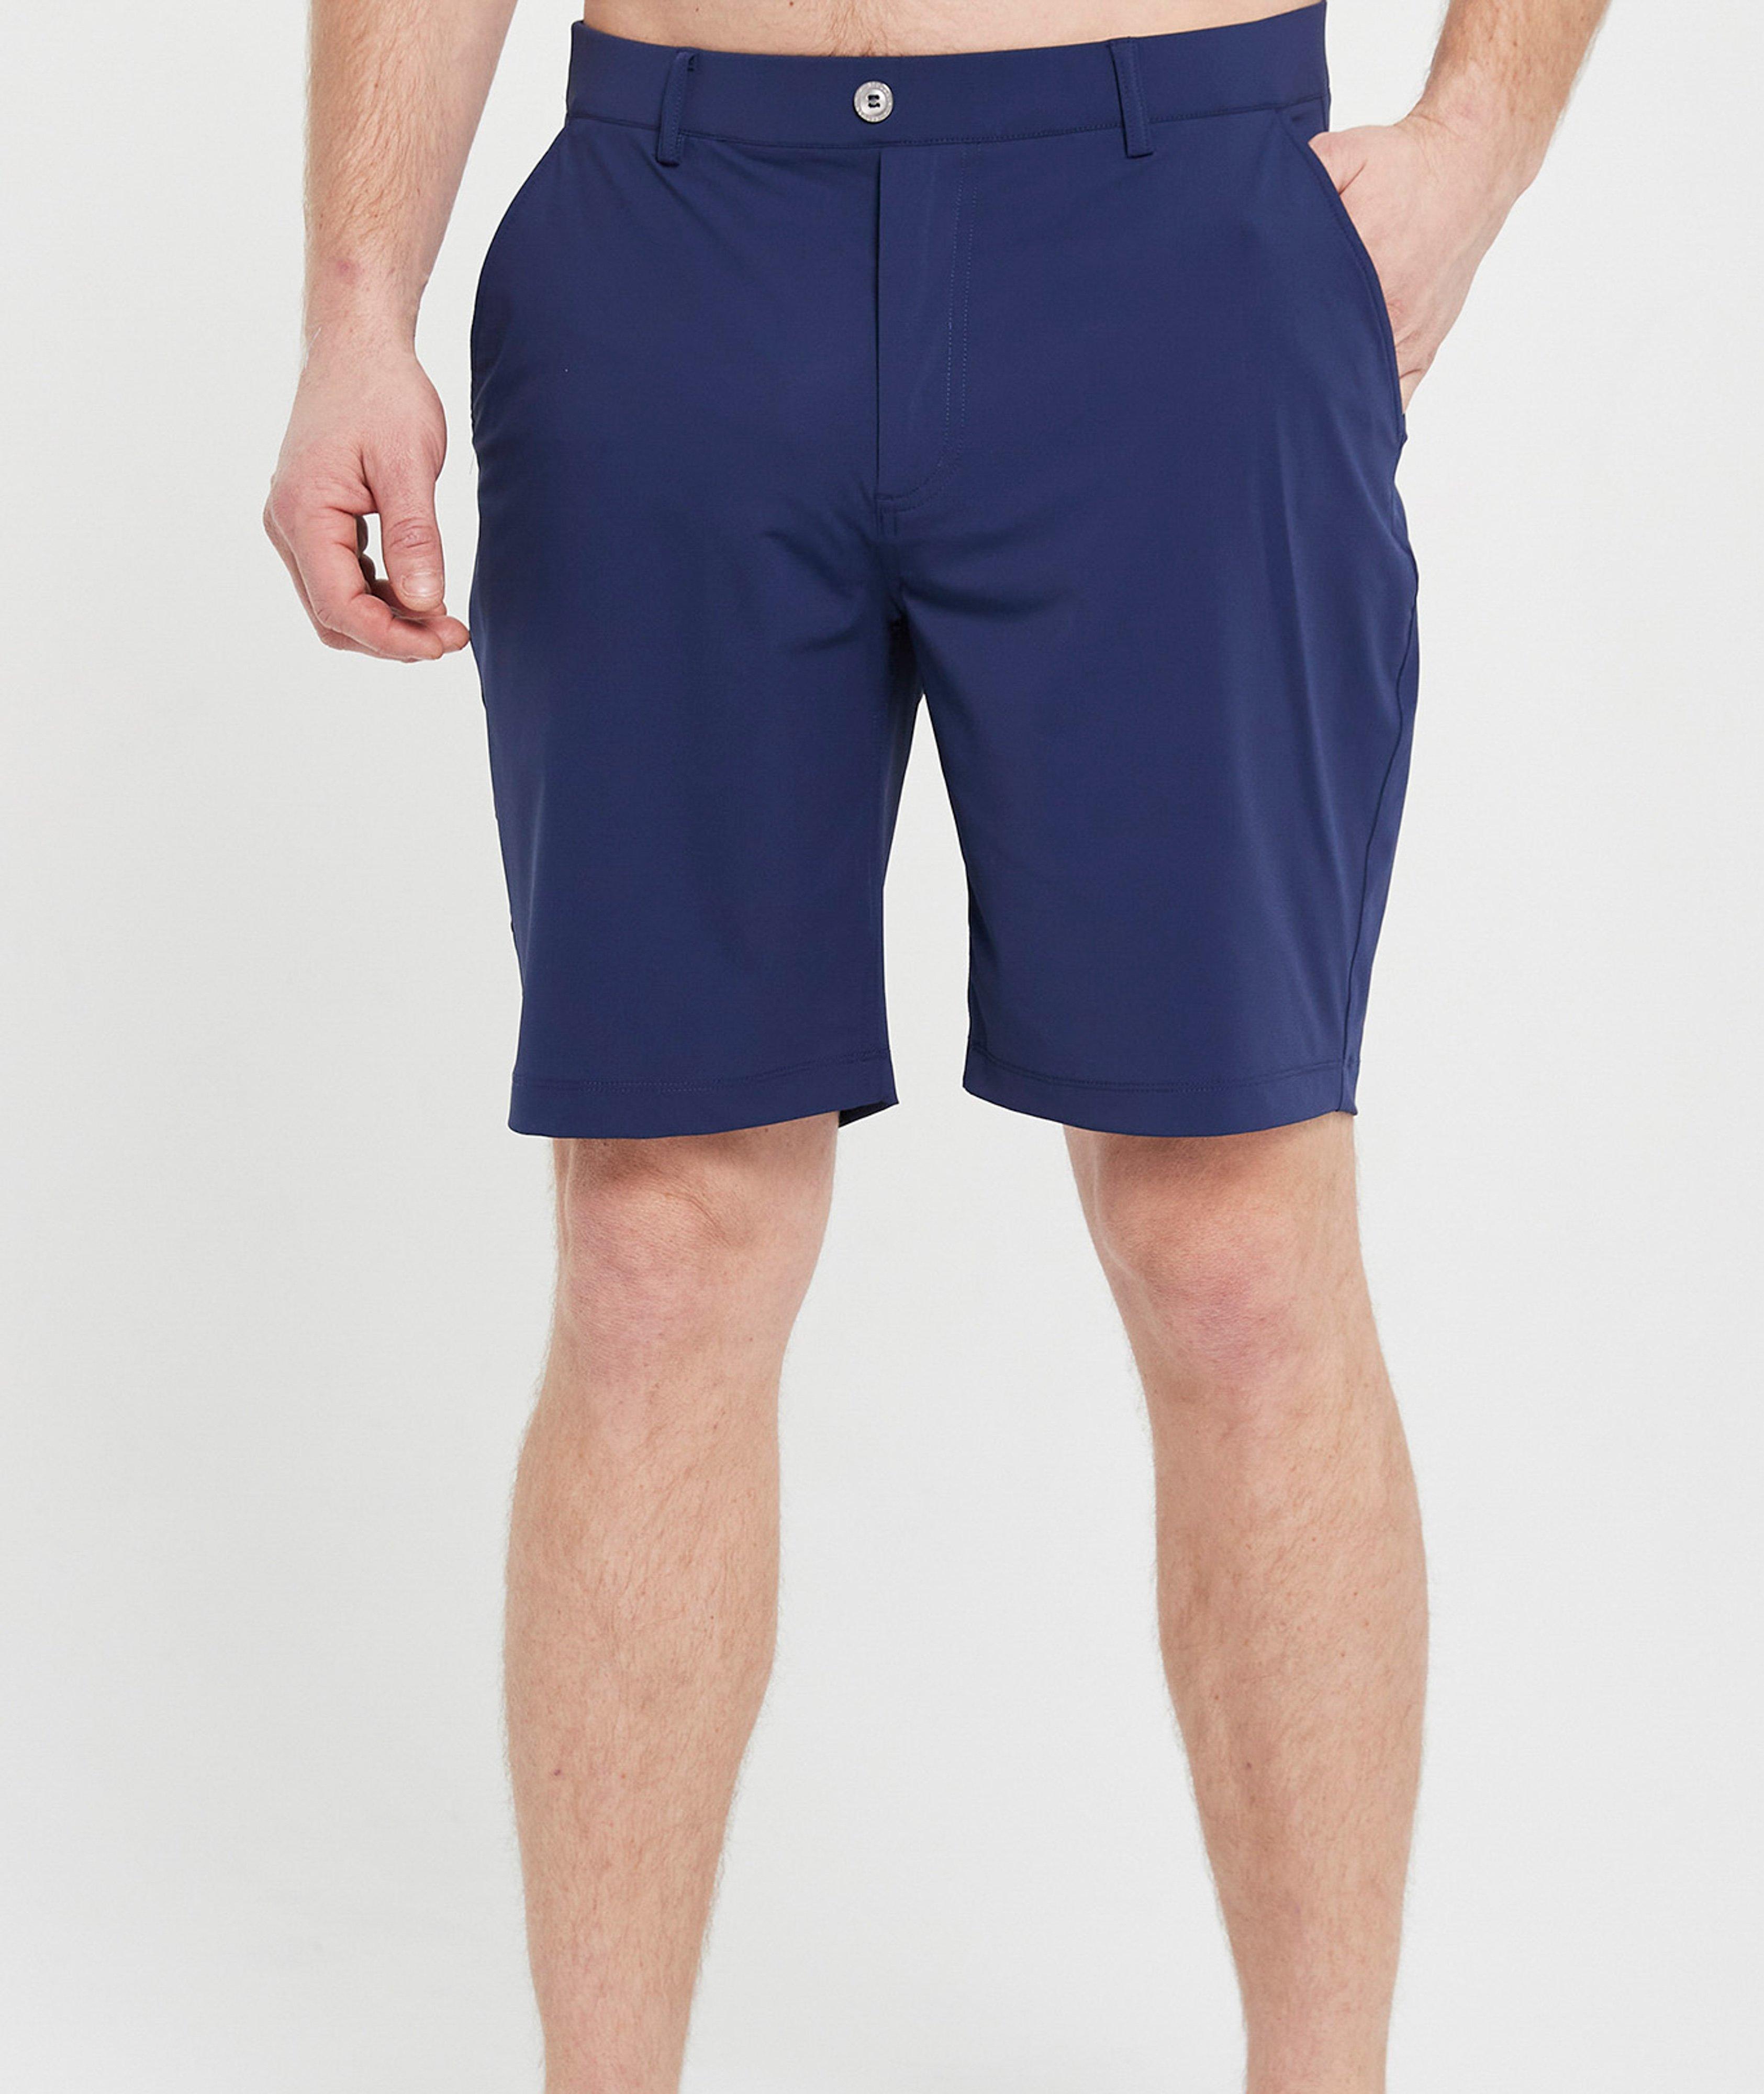 Hanover Pull-On Shorts image 0